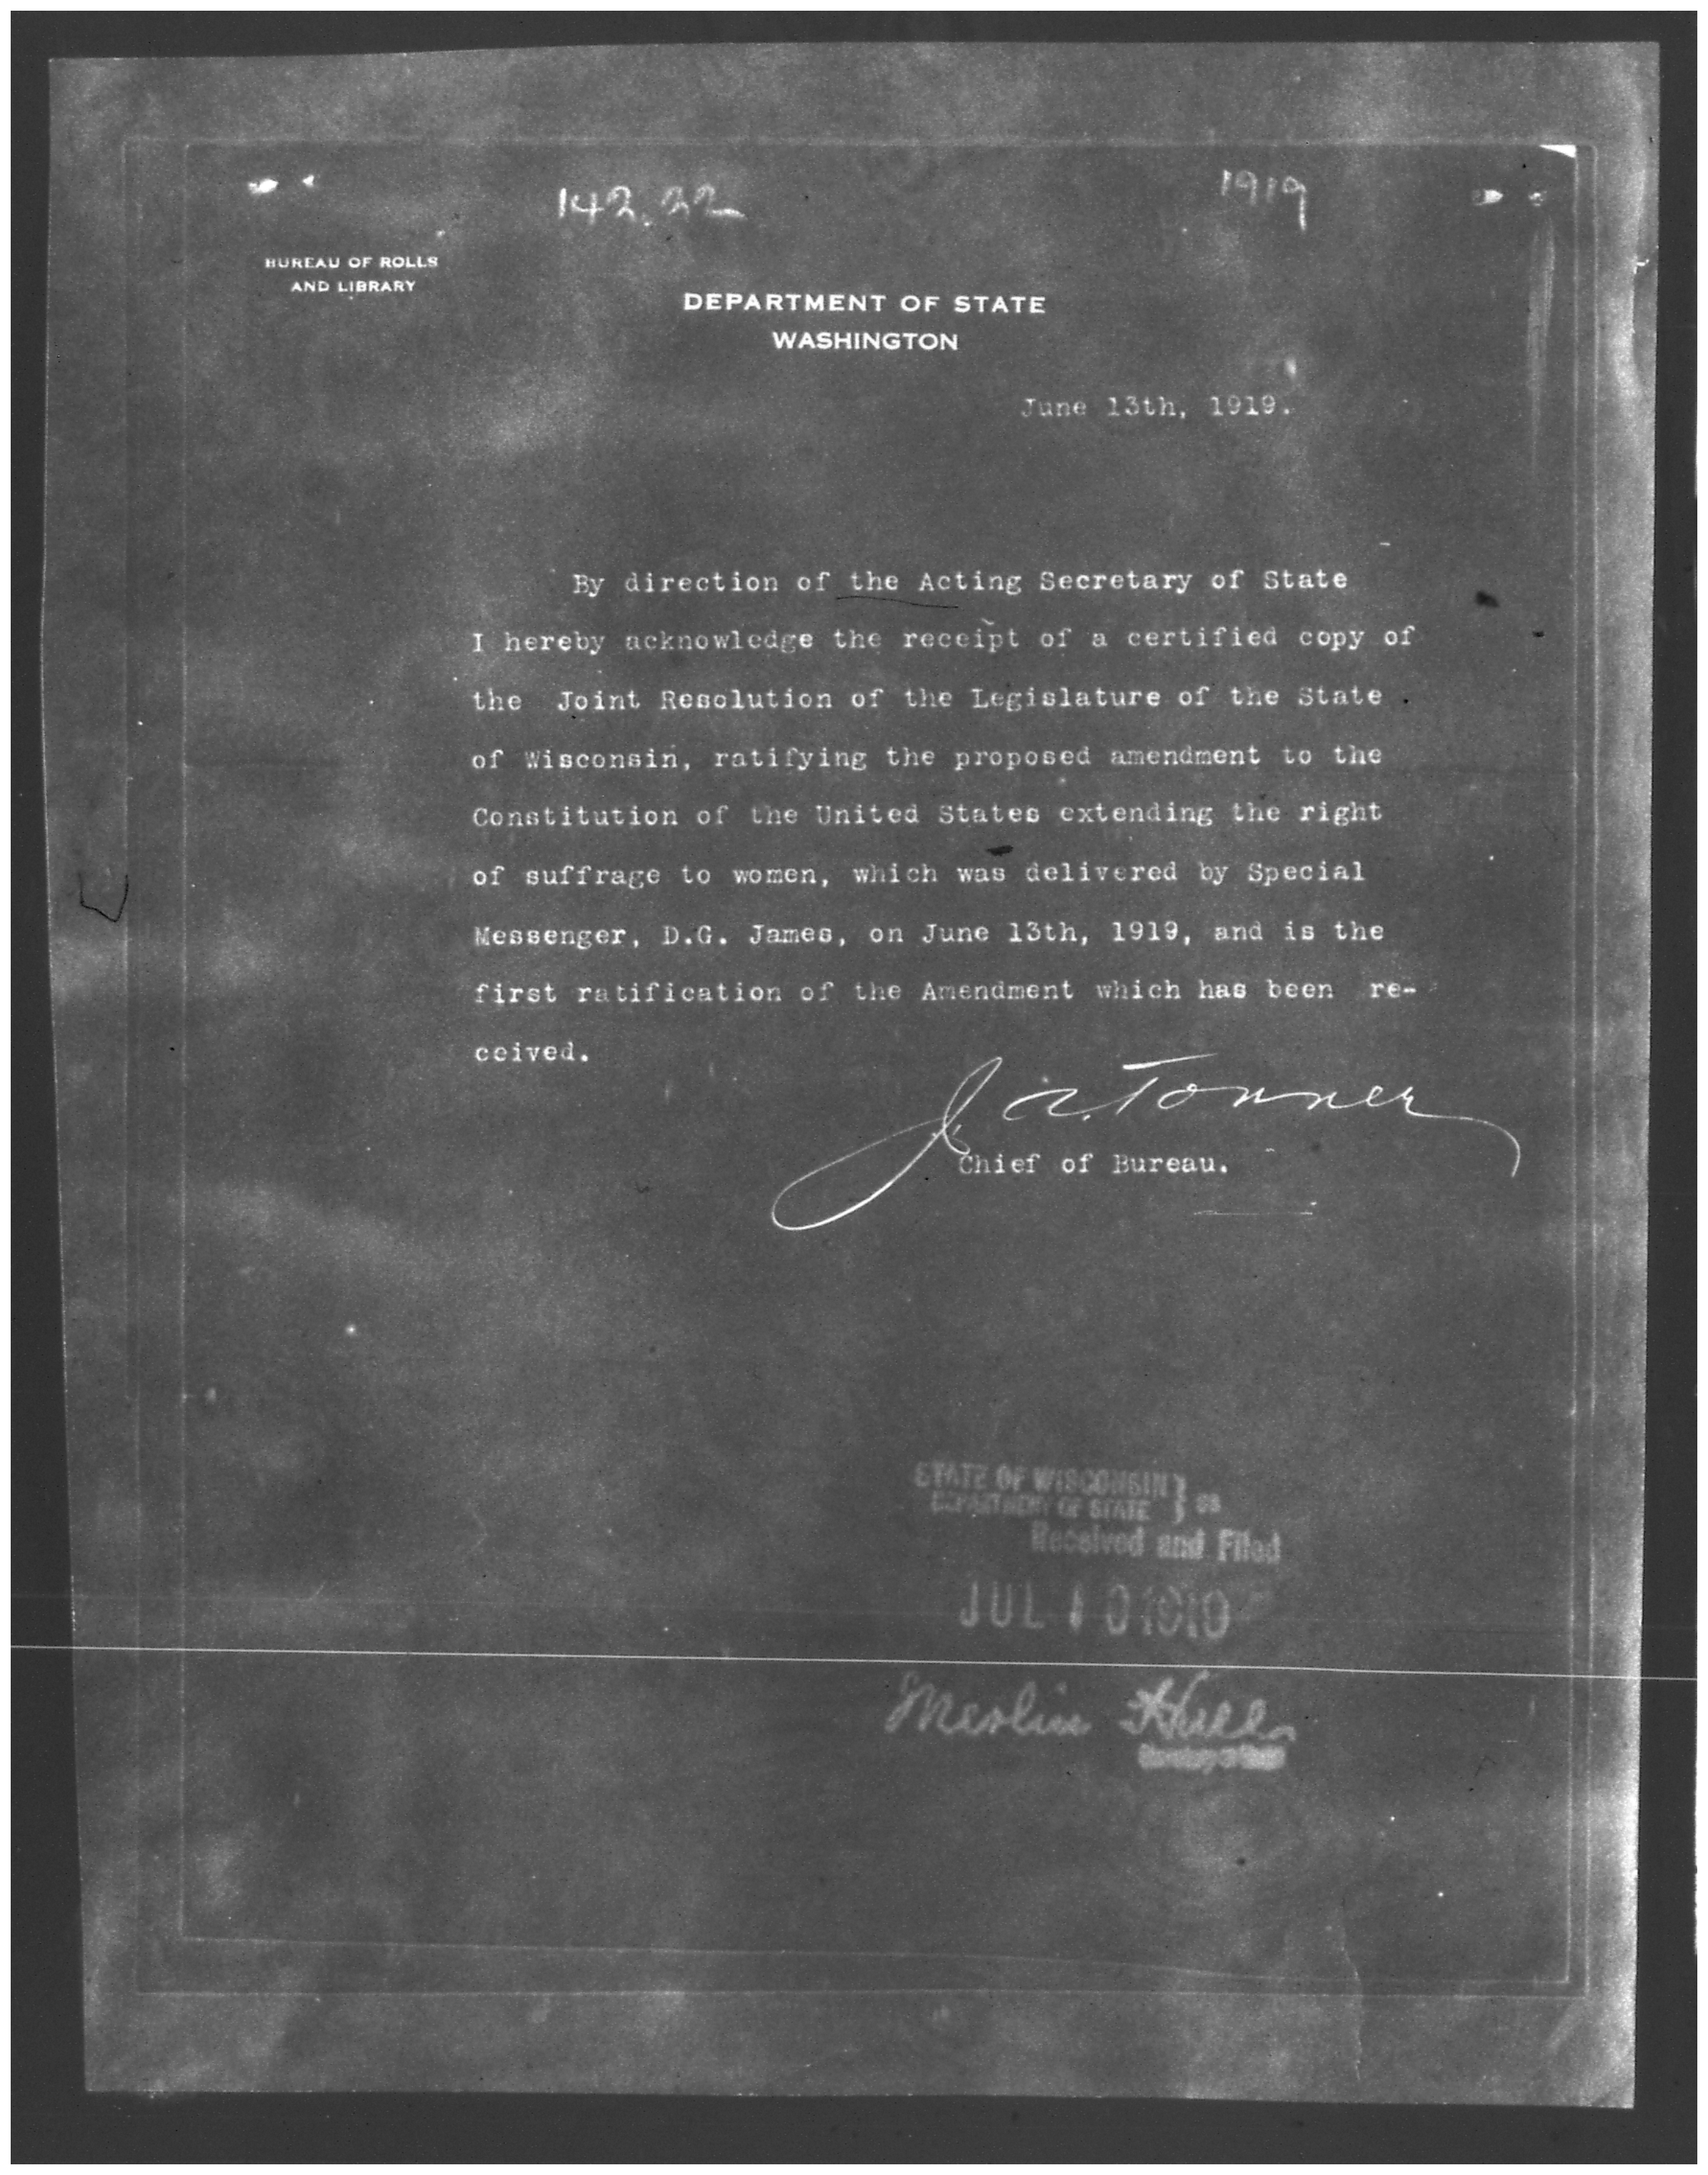 19th Amendment Letter